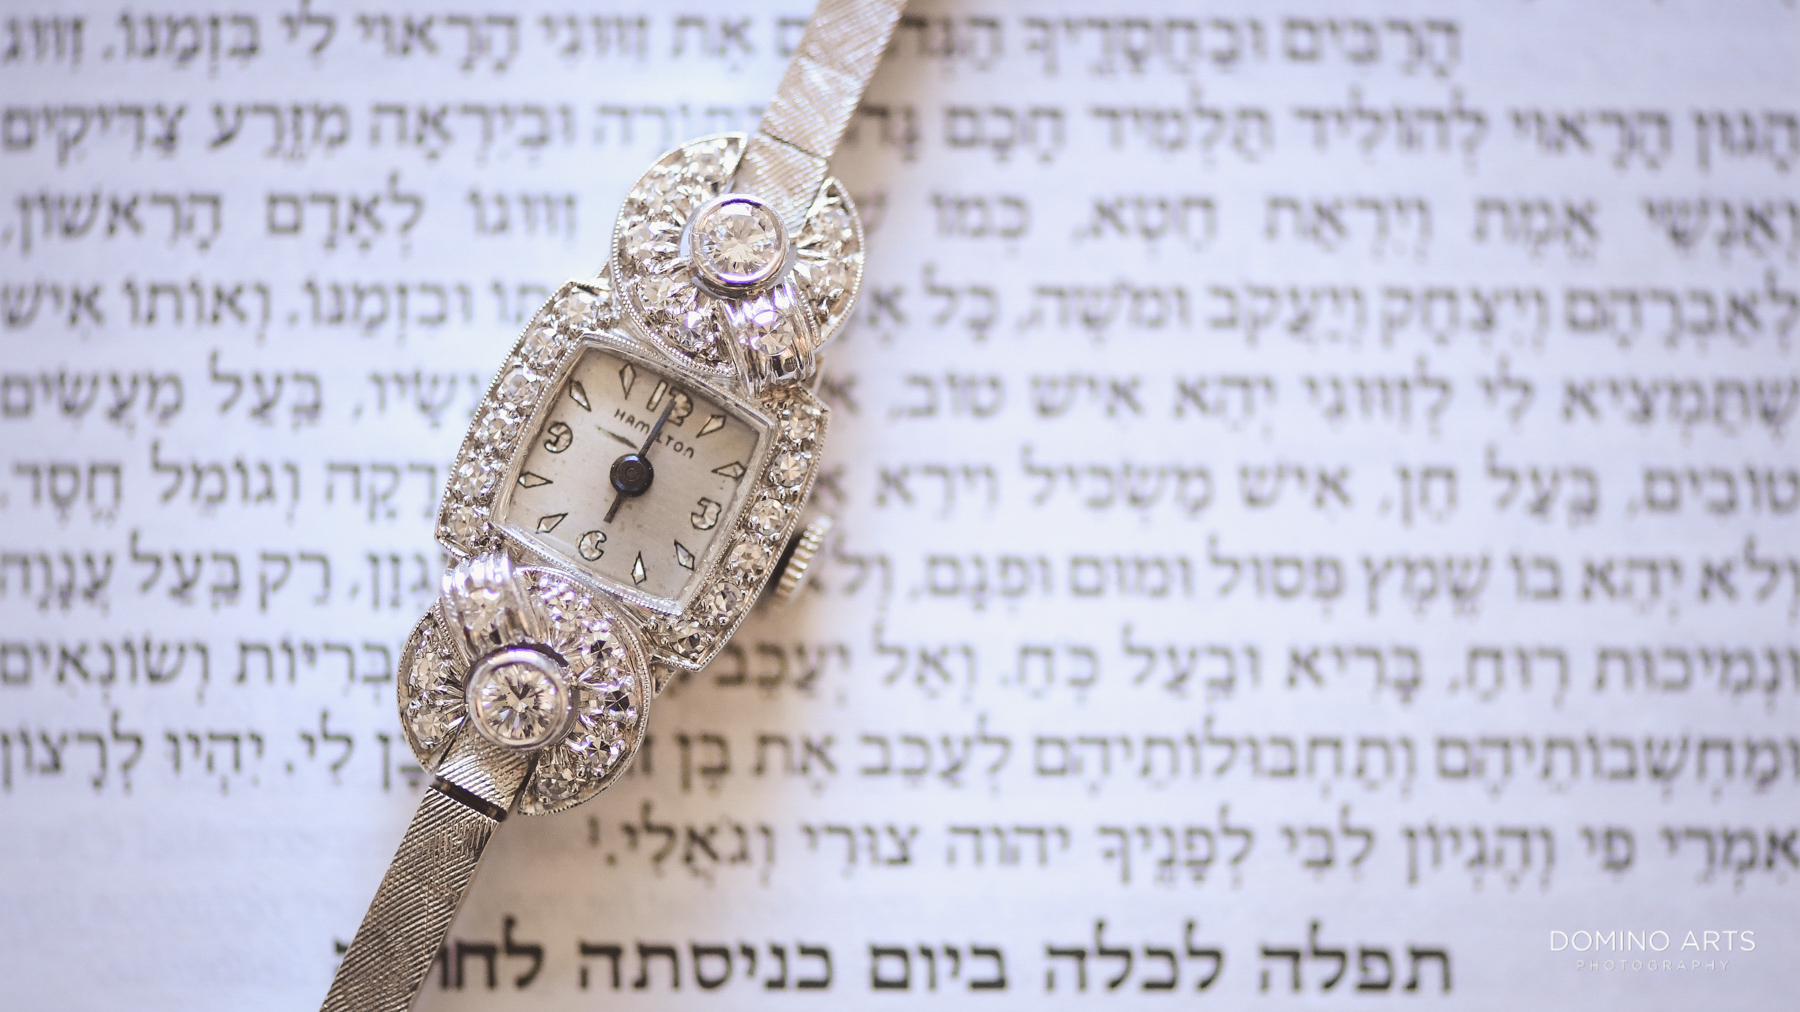 jewish orthodox Wedding Decor and details 